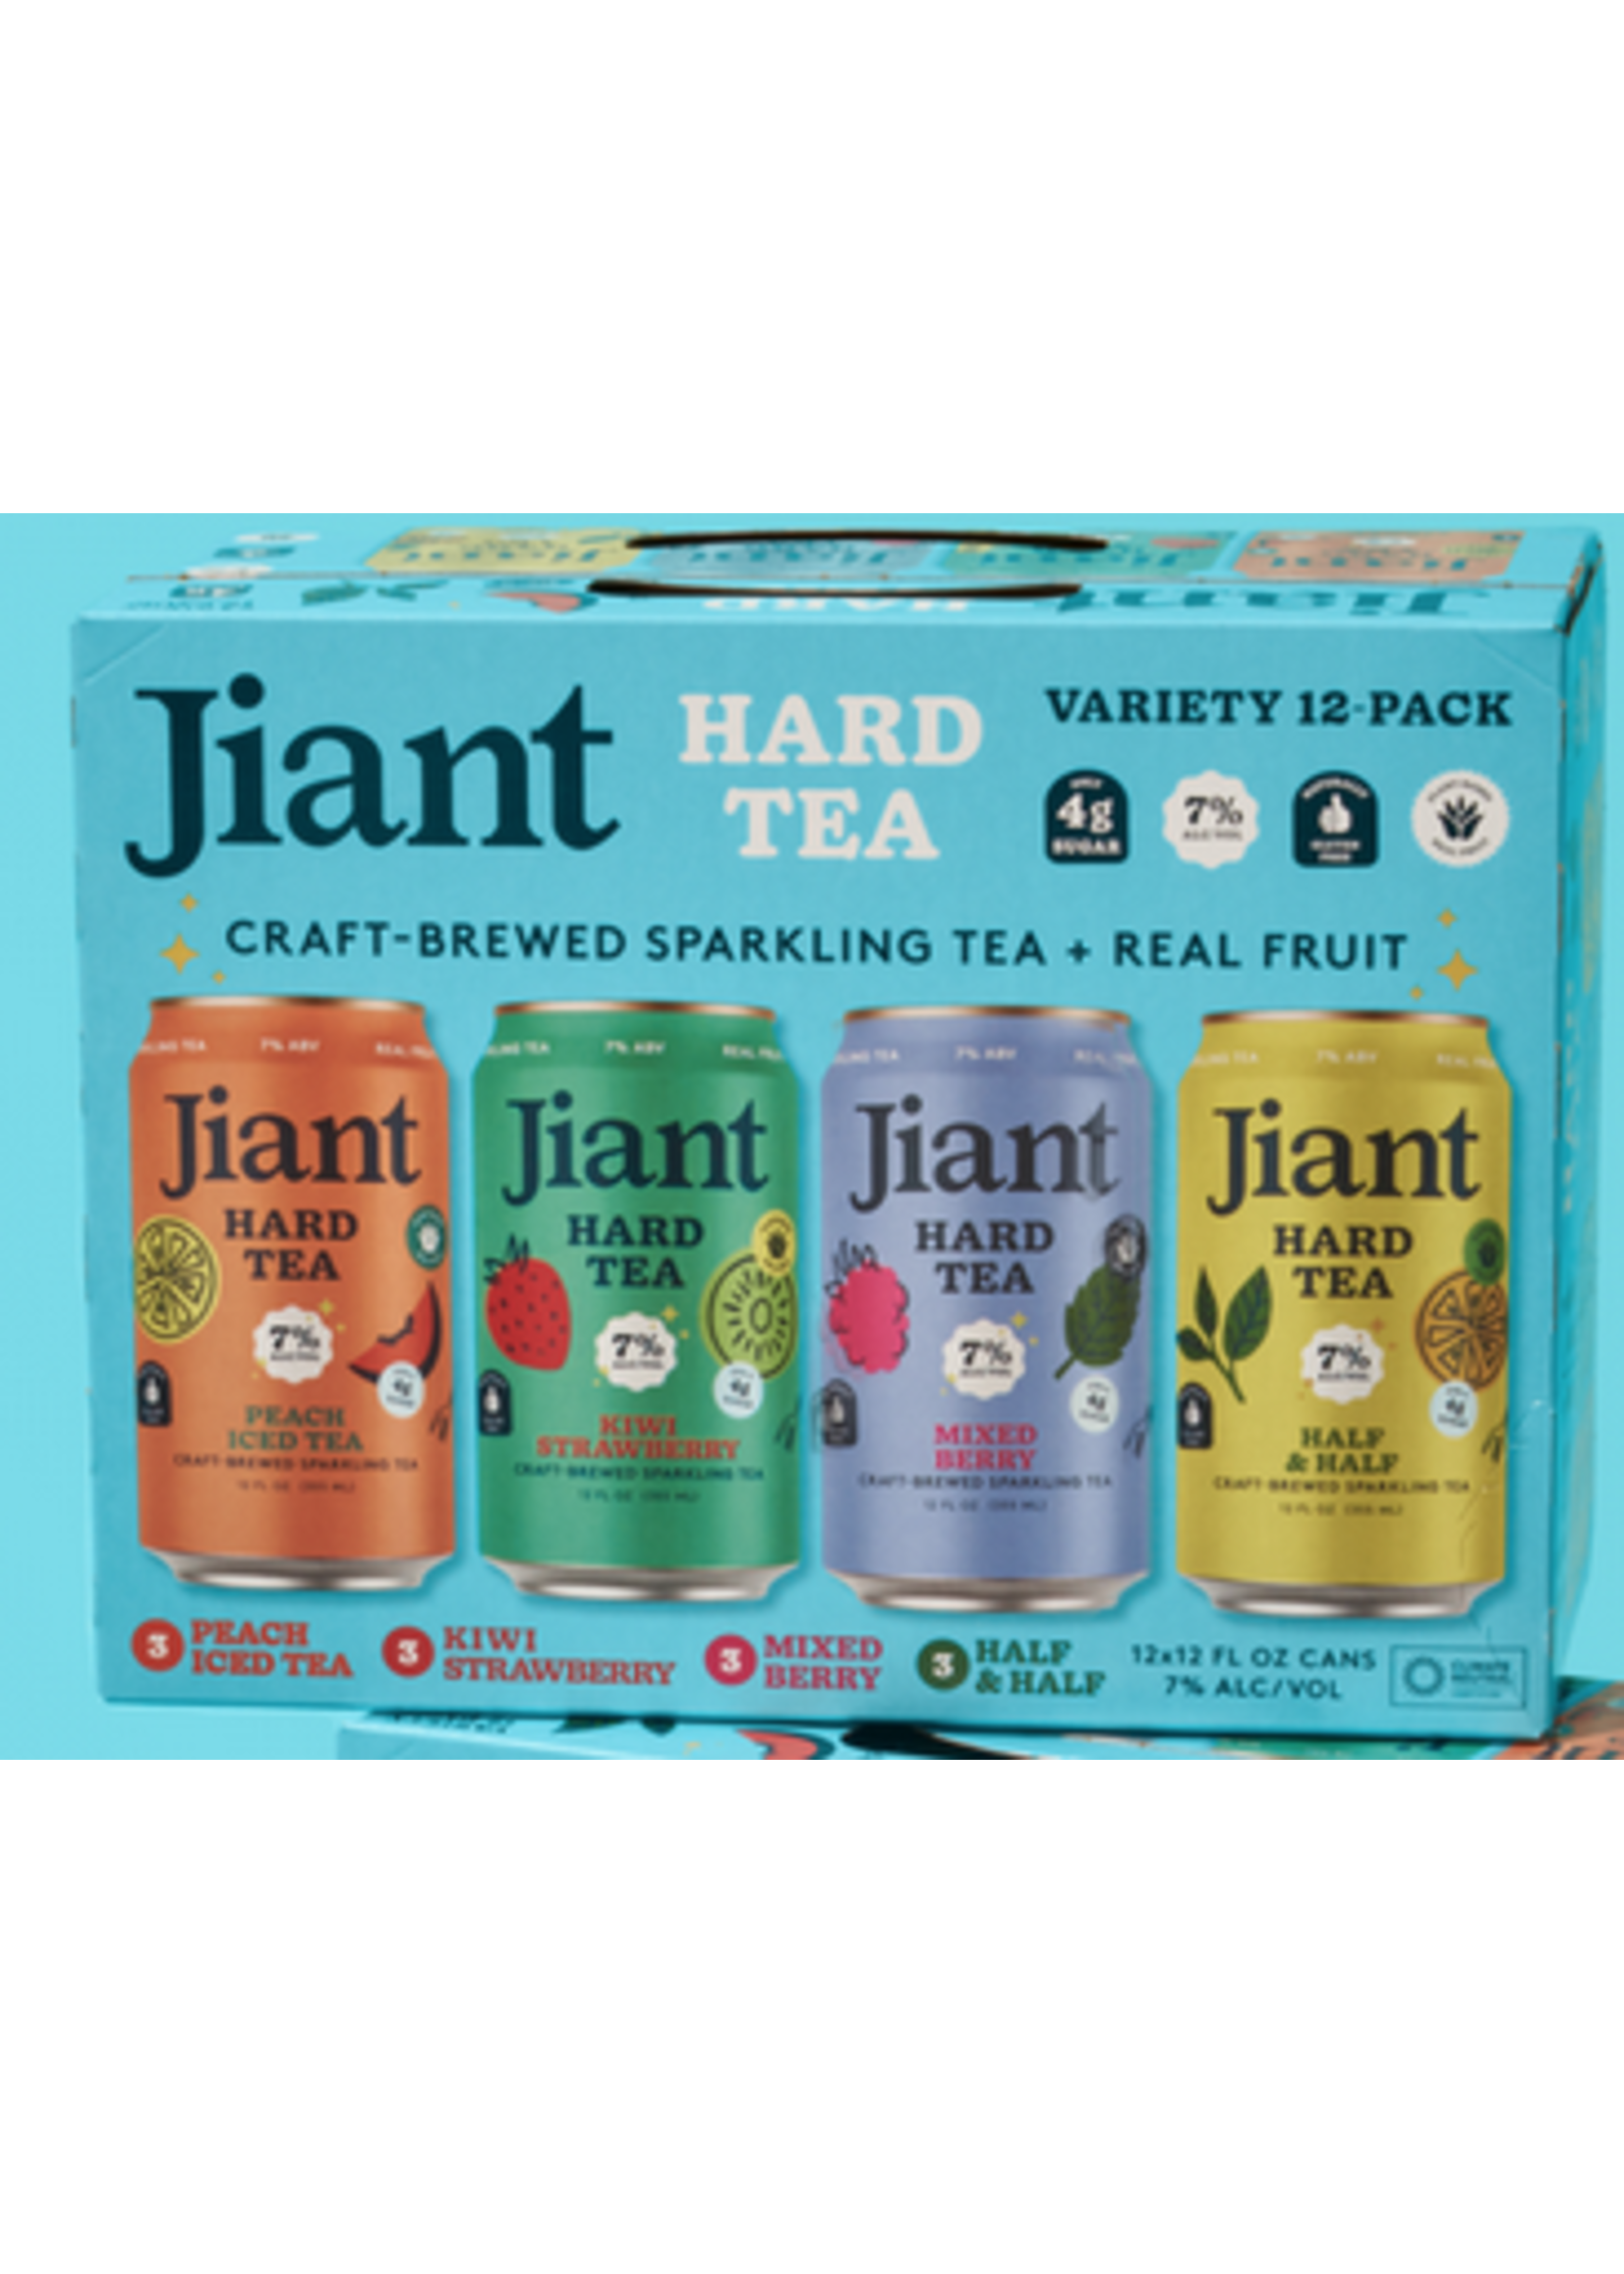 Jiant Hard Tea 12 Pack - Jiant -Hard Tea Mix Pack